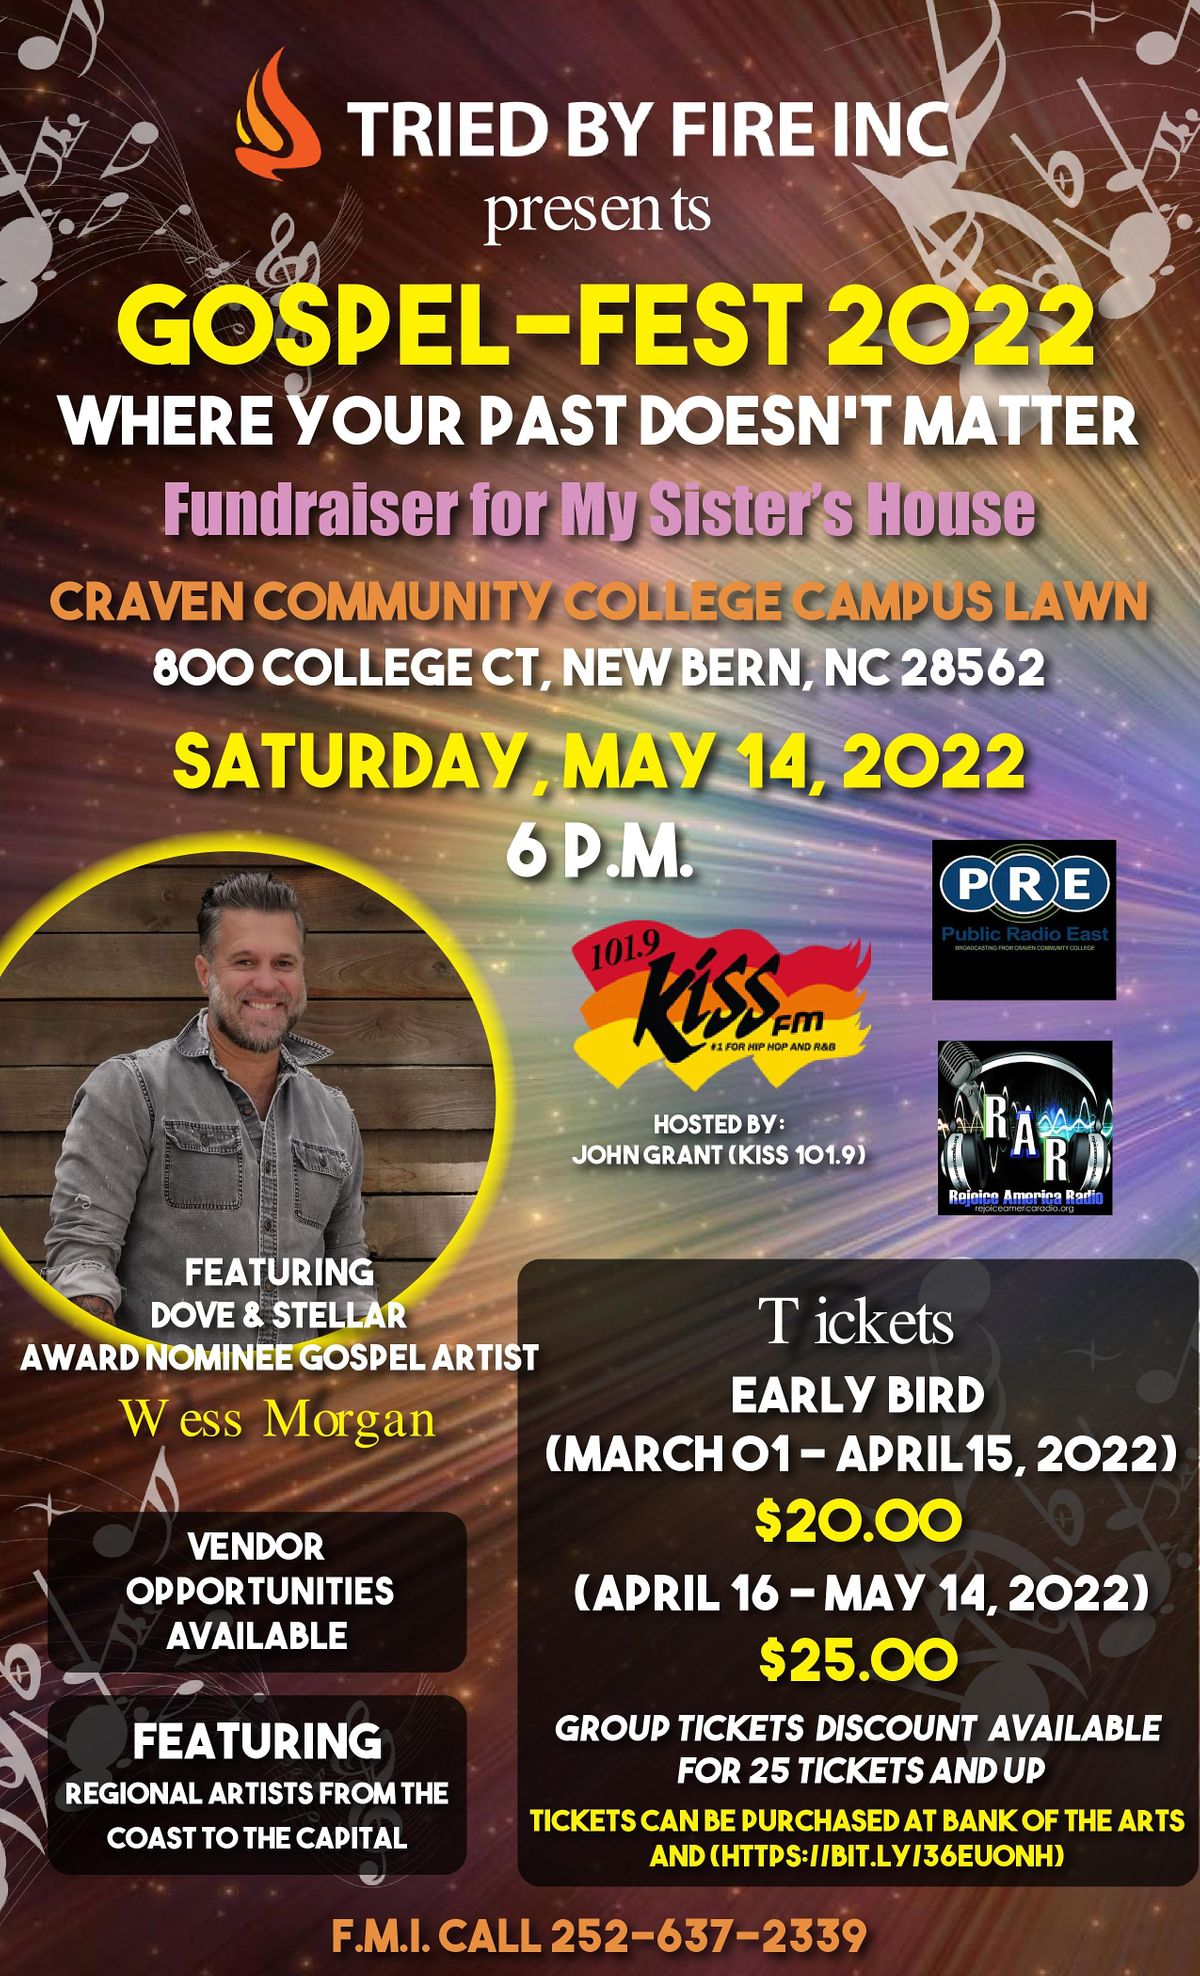 GospelFest 2022 800 College Ct, New Bern, NC May 14, 2022